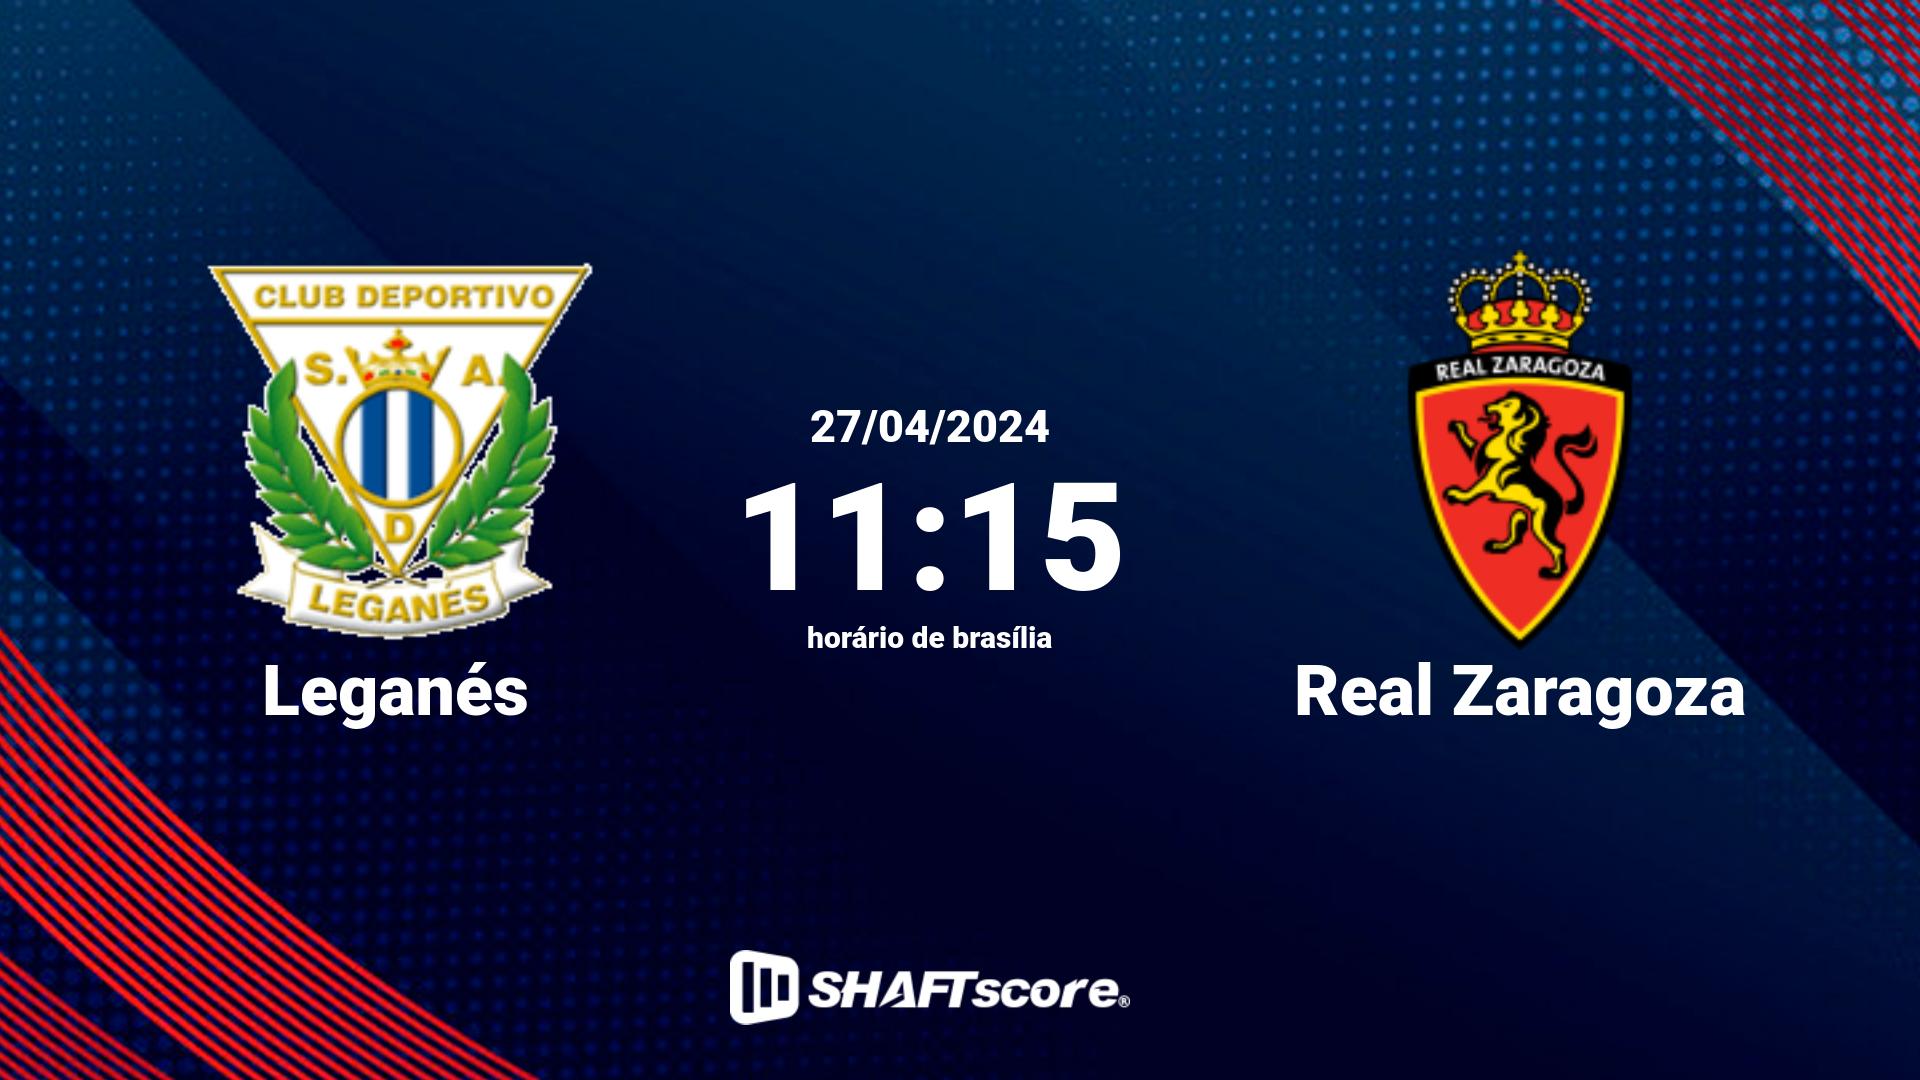 Estatísticas do jogo Leganés vs Real Zaragoza 27.04 11:15